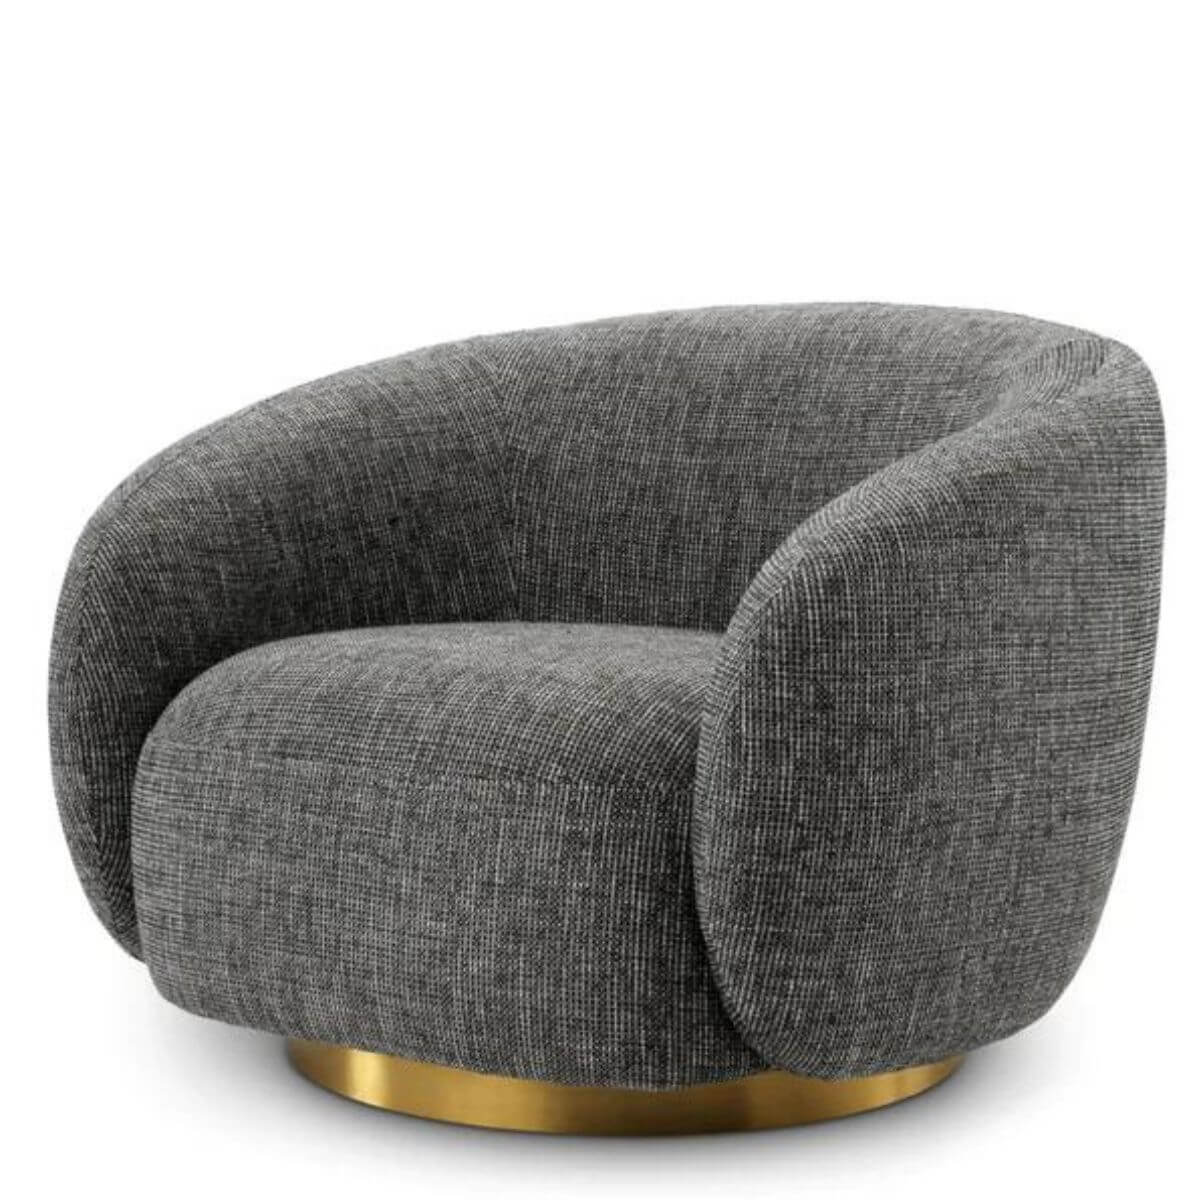 LuxeLiving Comfortable Cotton Linen Sofa Set